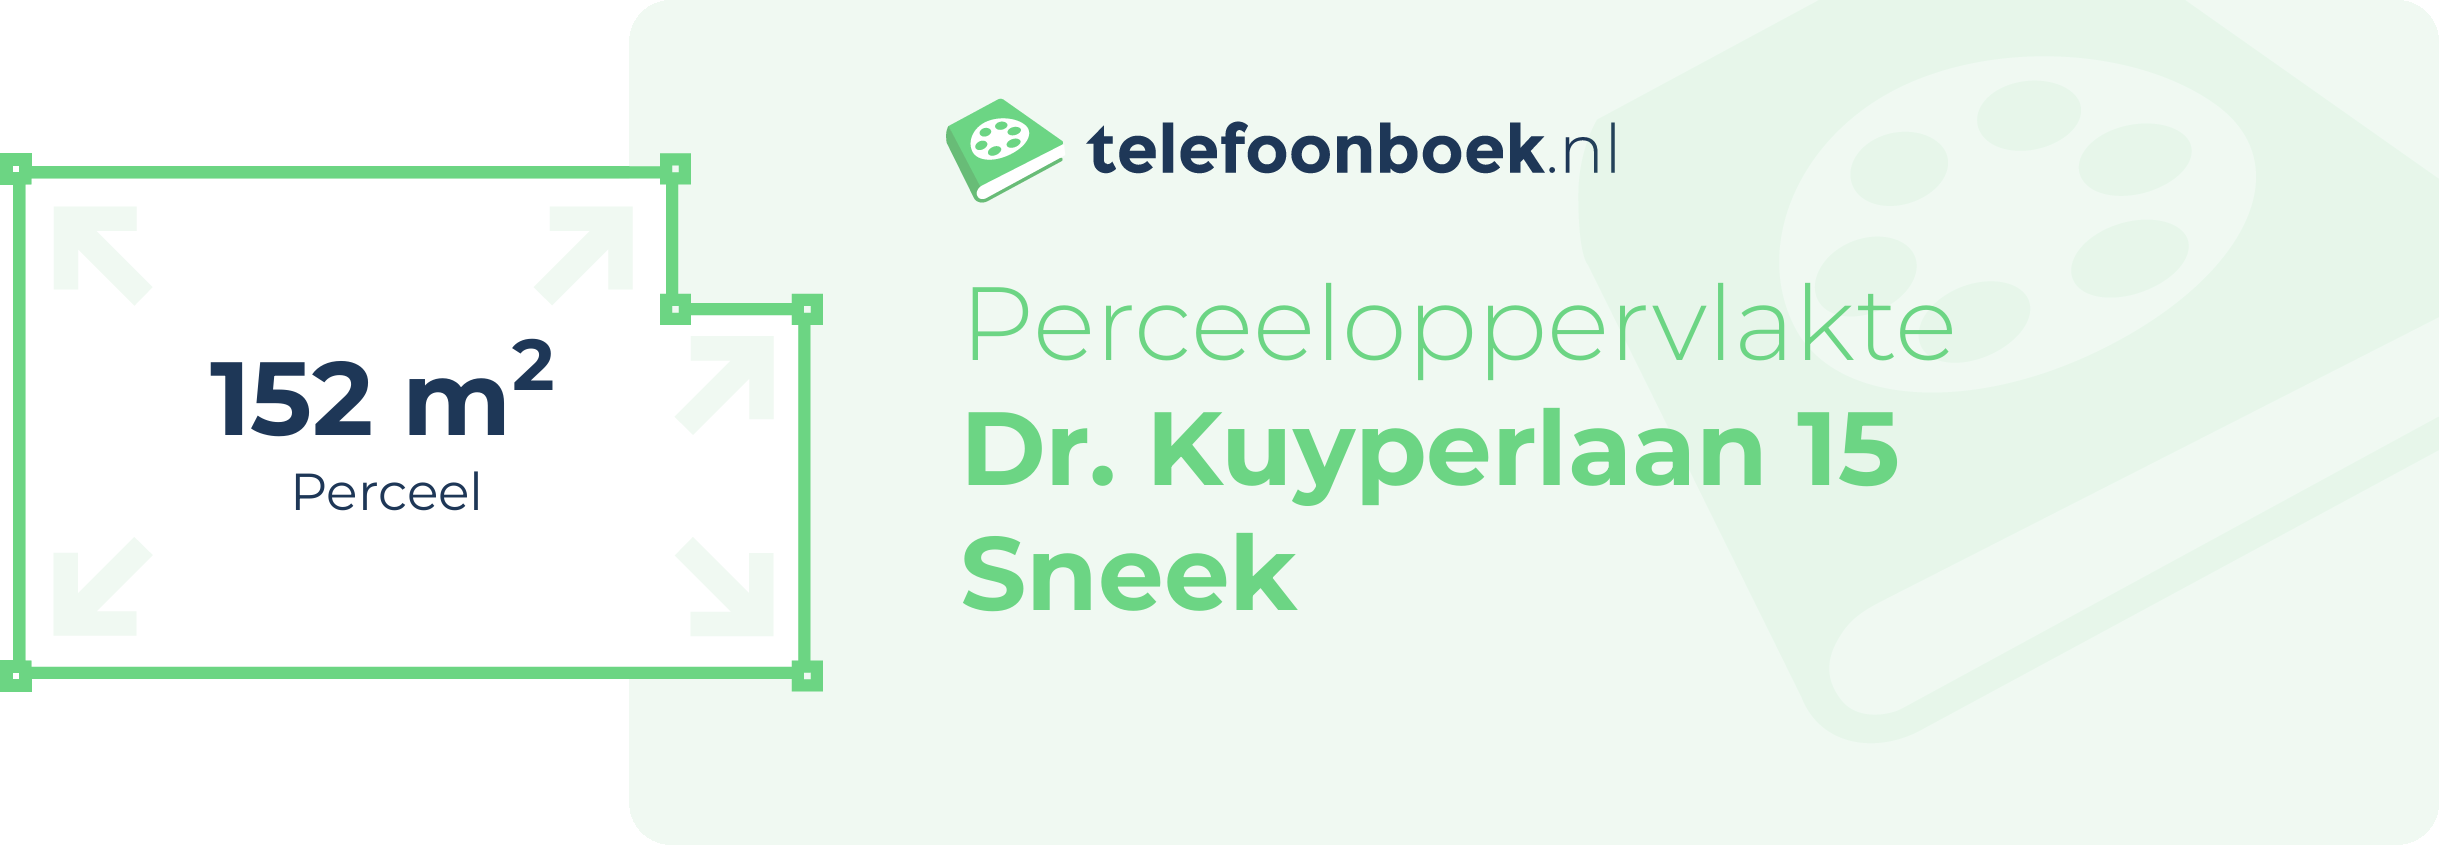 Perceeloppervlakte Dr. Kuyperlaan 15 Sneek